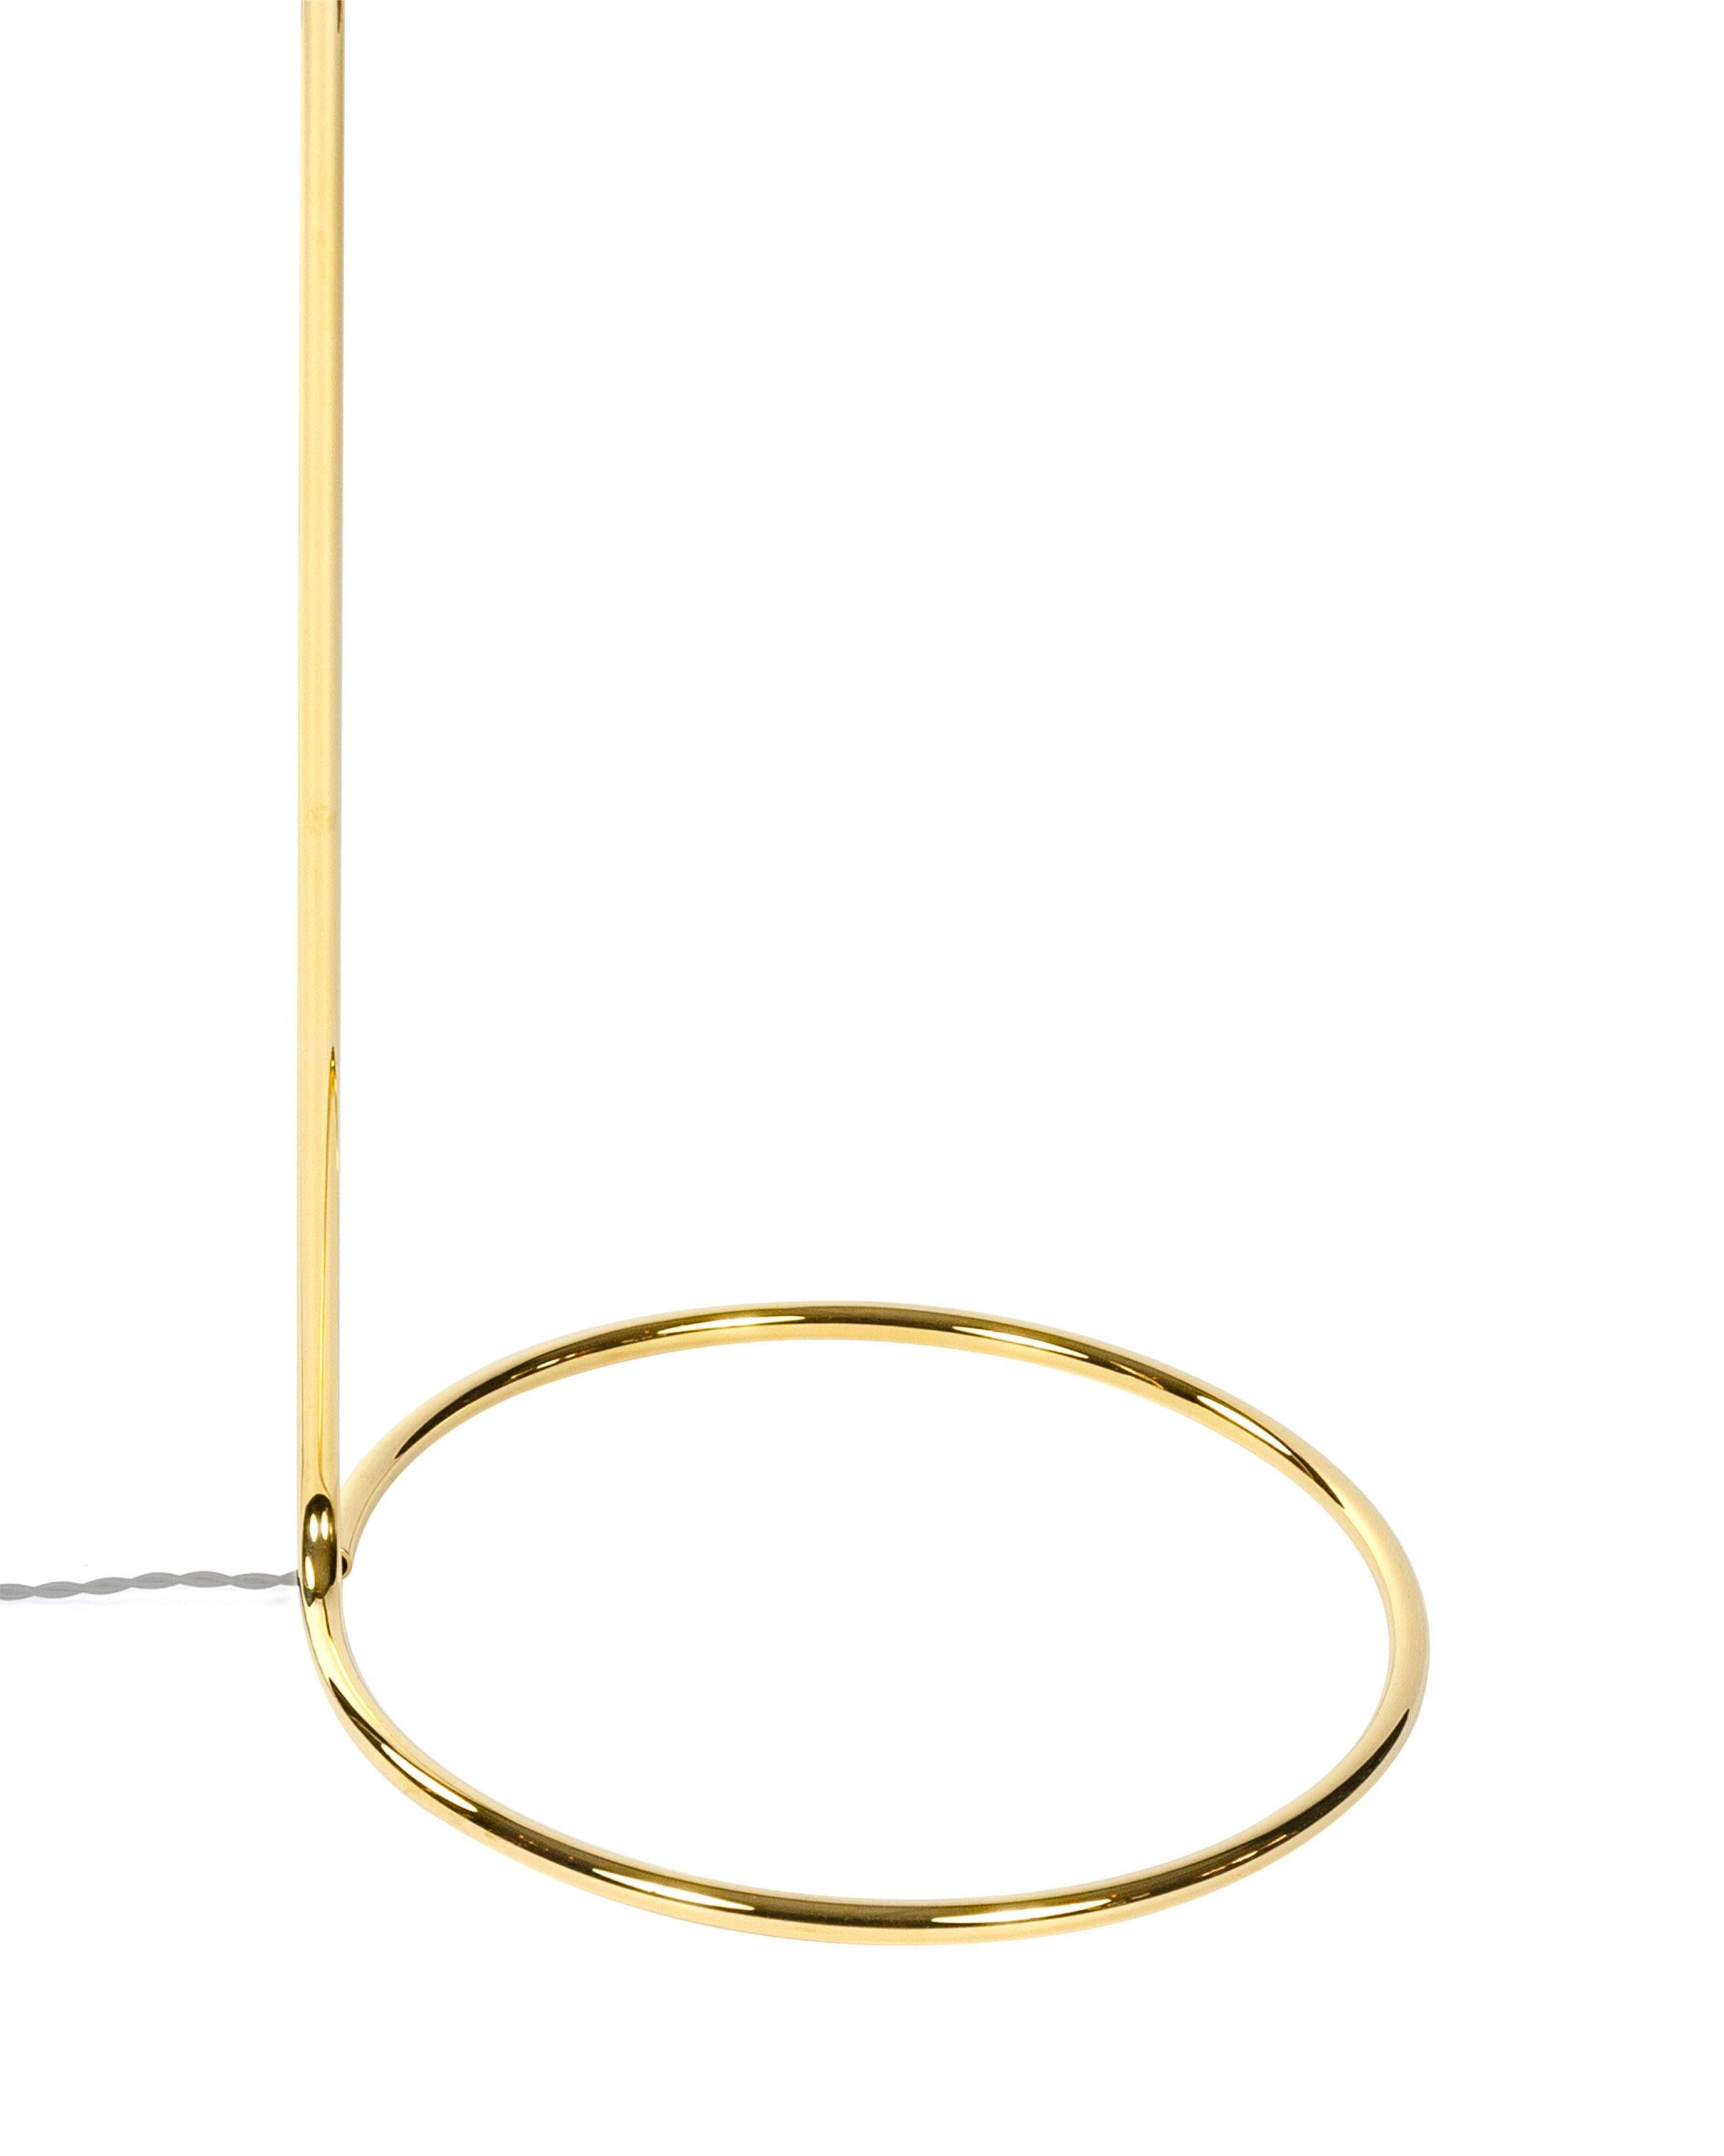 Polished WYETH Original Bronze 'Rope' Floor Lamp For Sale